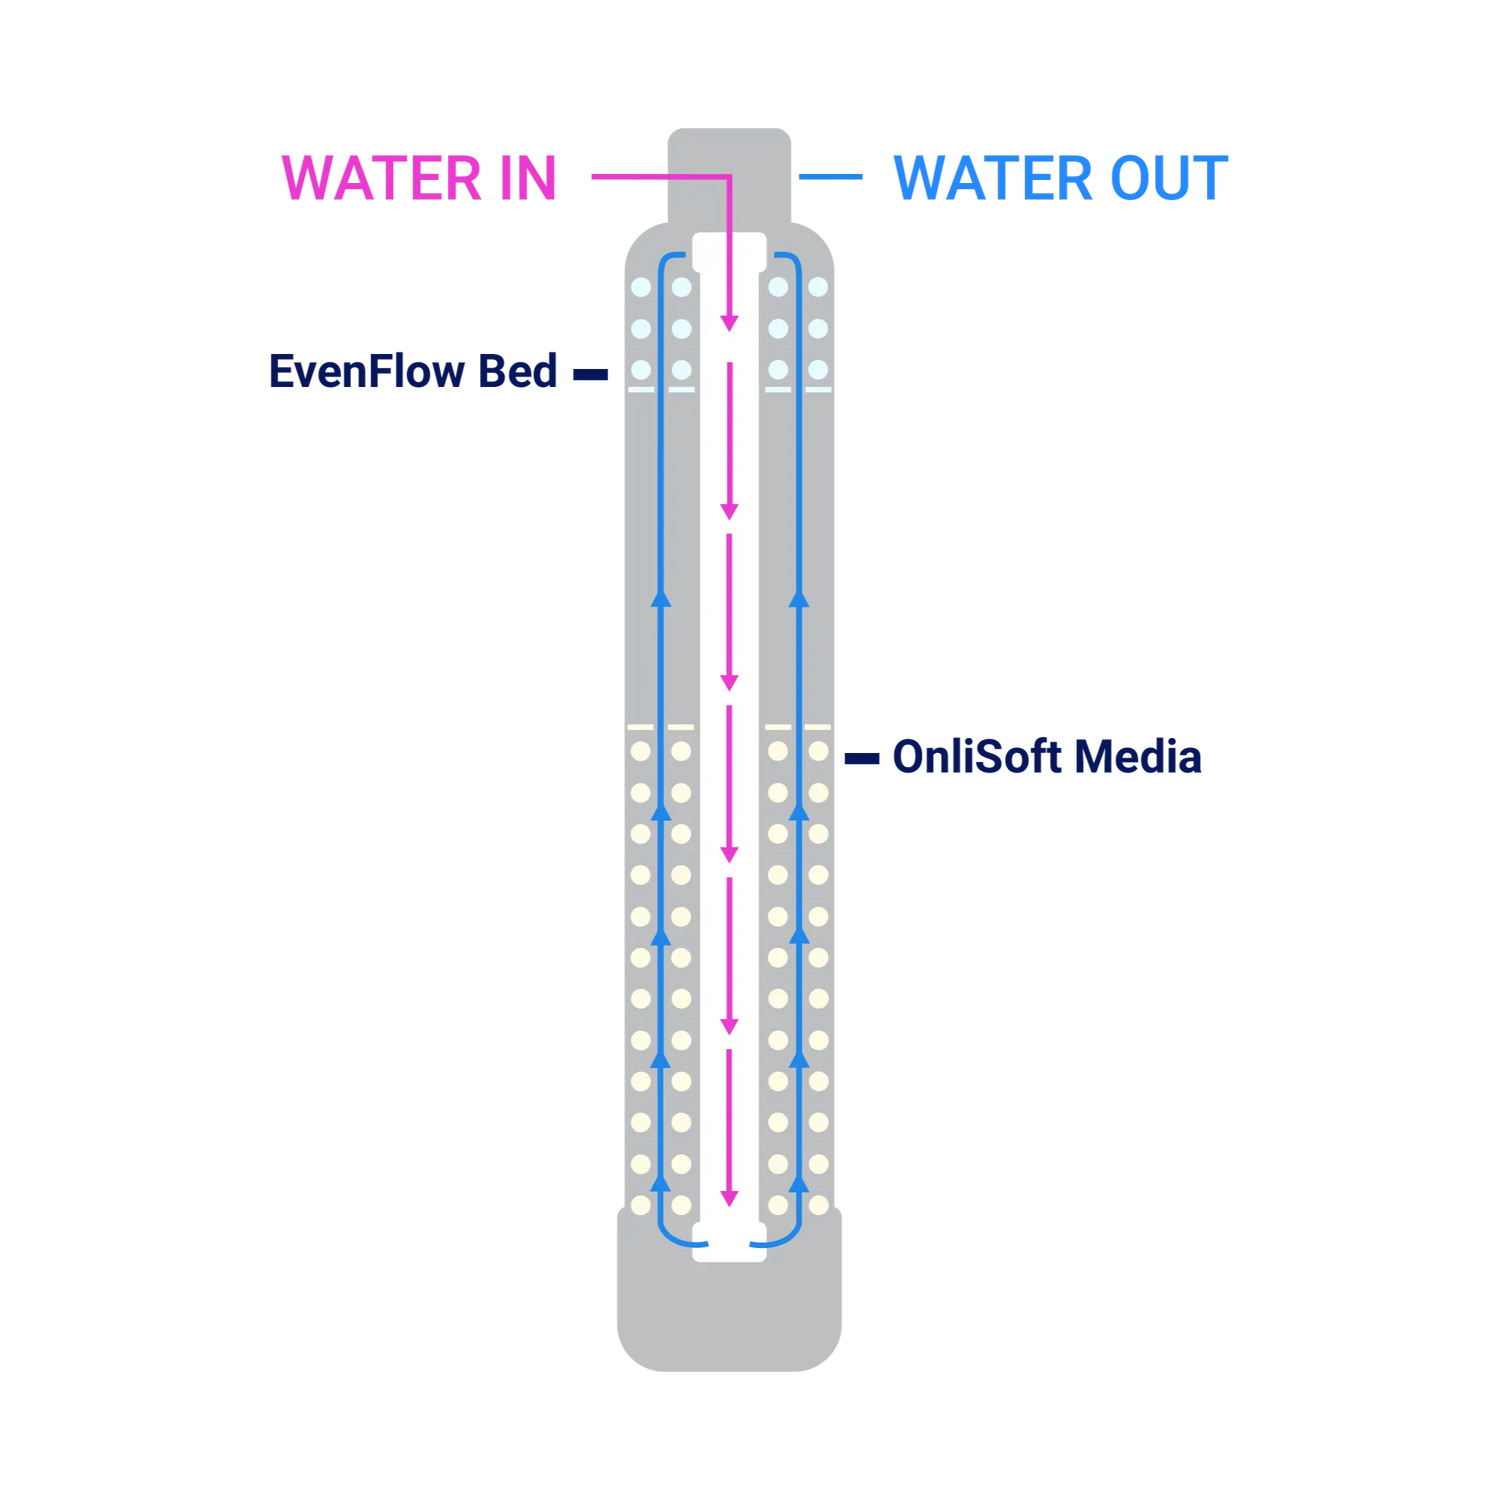 CBS Whole House Salt-Free Water Softener - RKIN